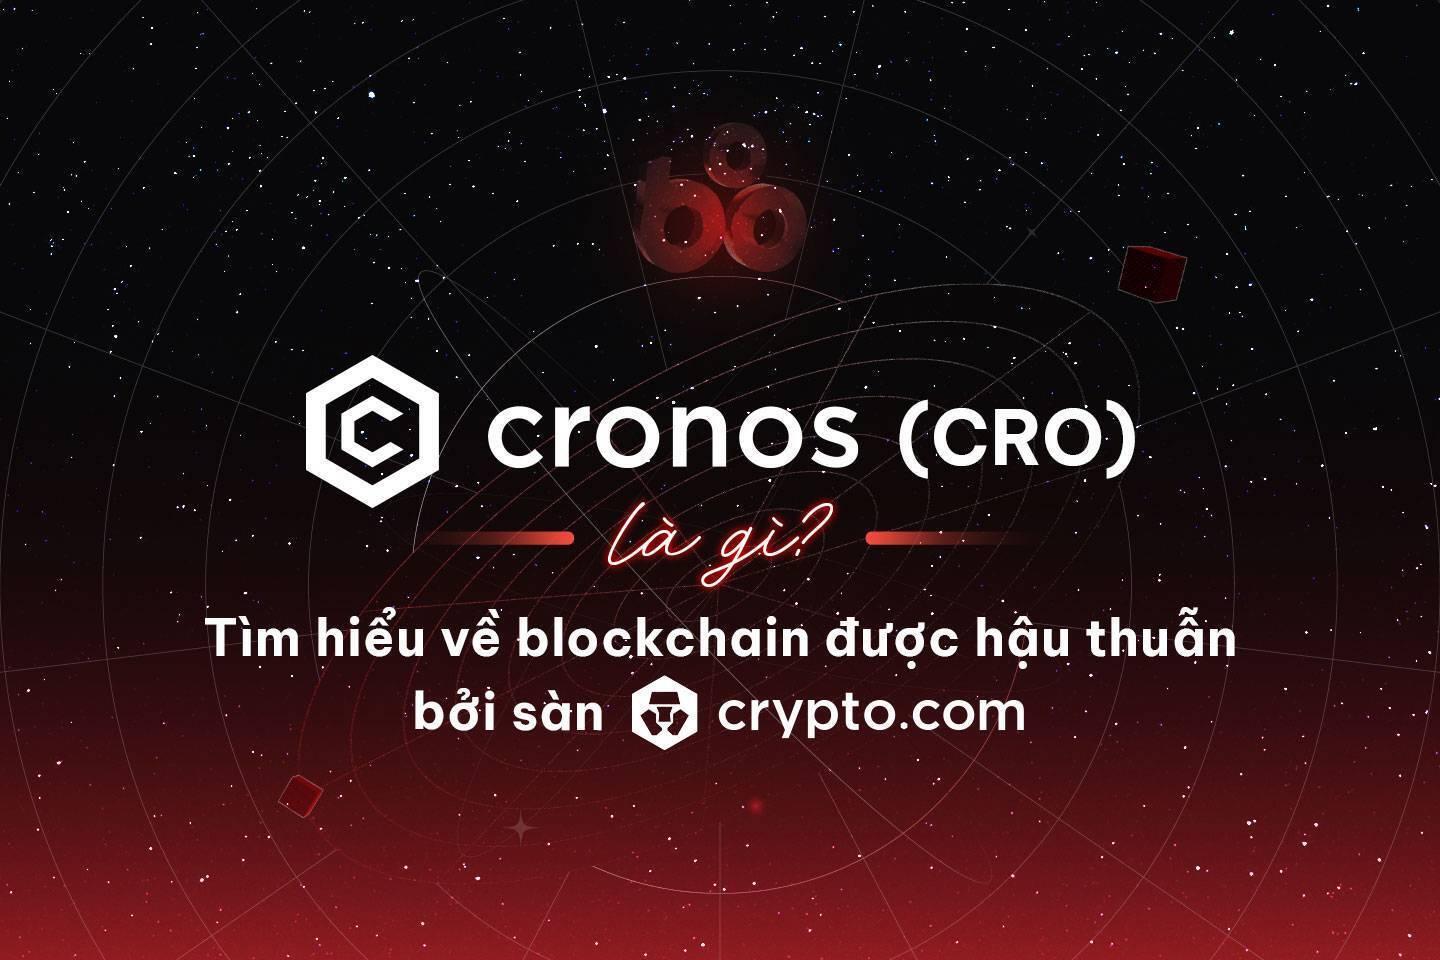 cronos-cro-la-gi-tim-hieu-ve-blockchain-duoc-hau-thuan-boi-san-cryptocom